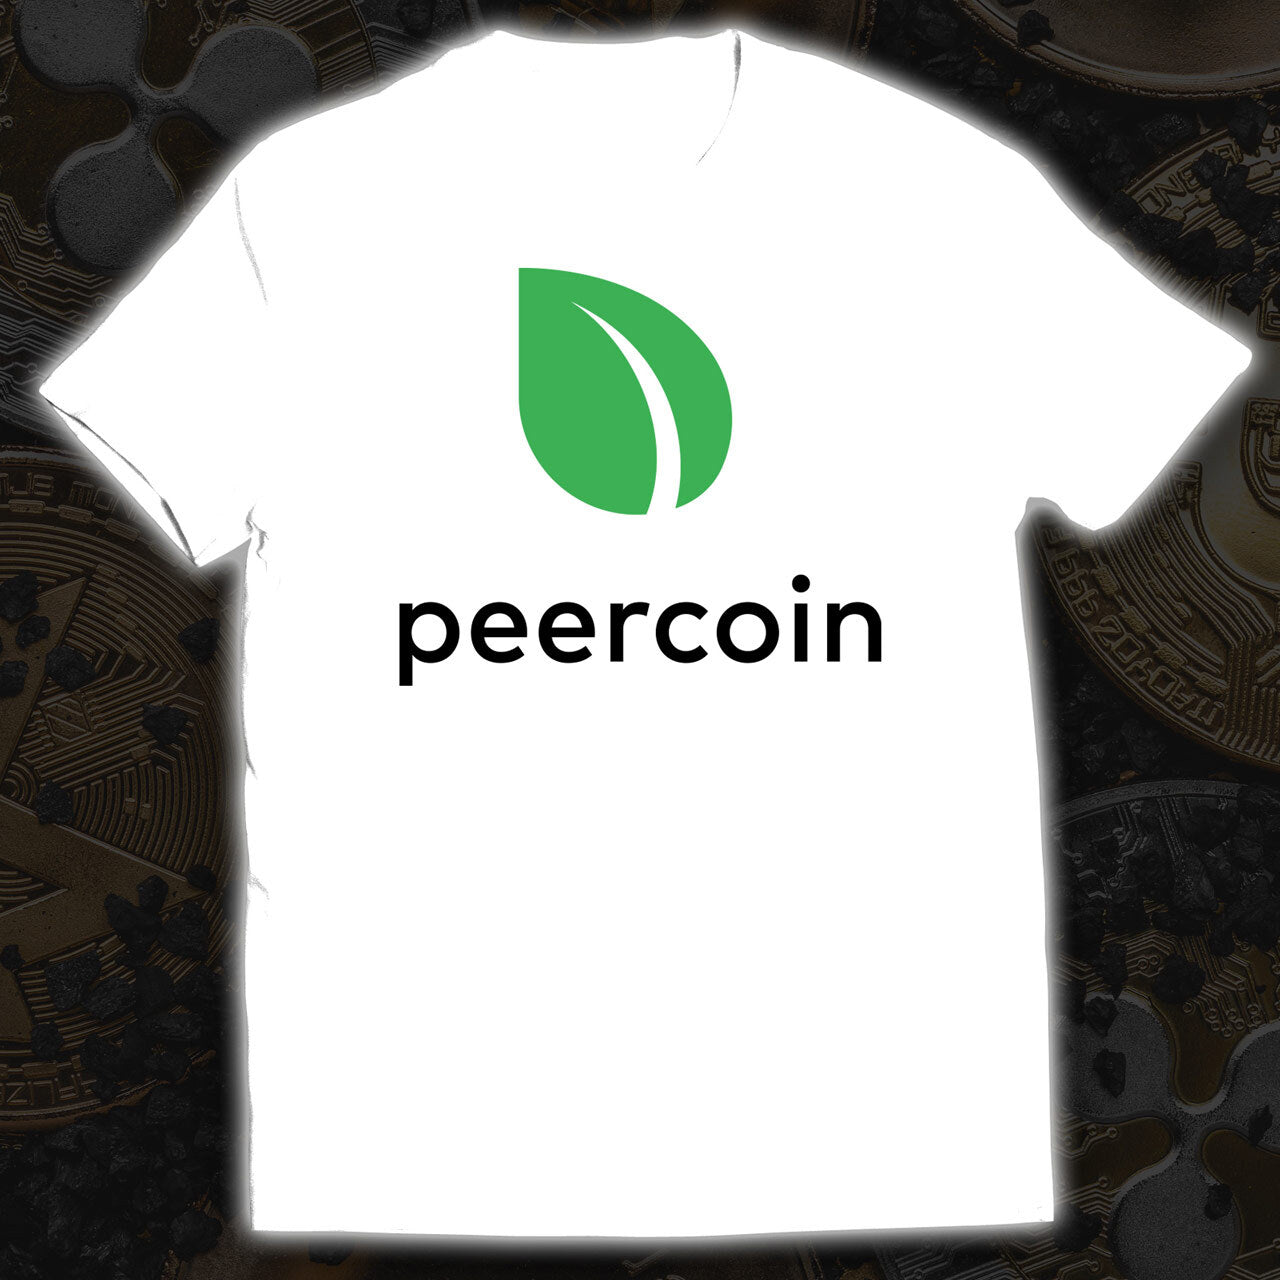 Peercoin T-Shirt